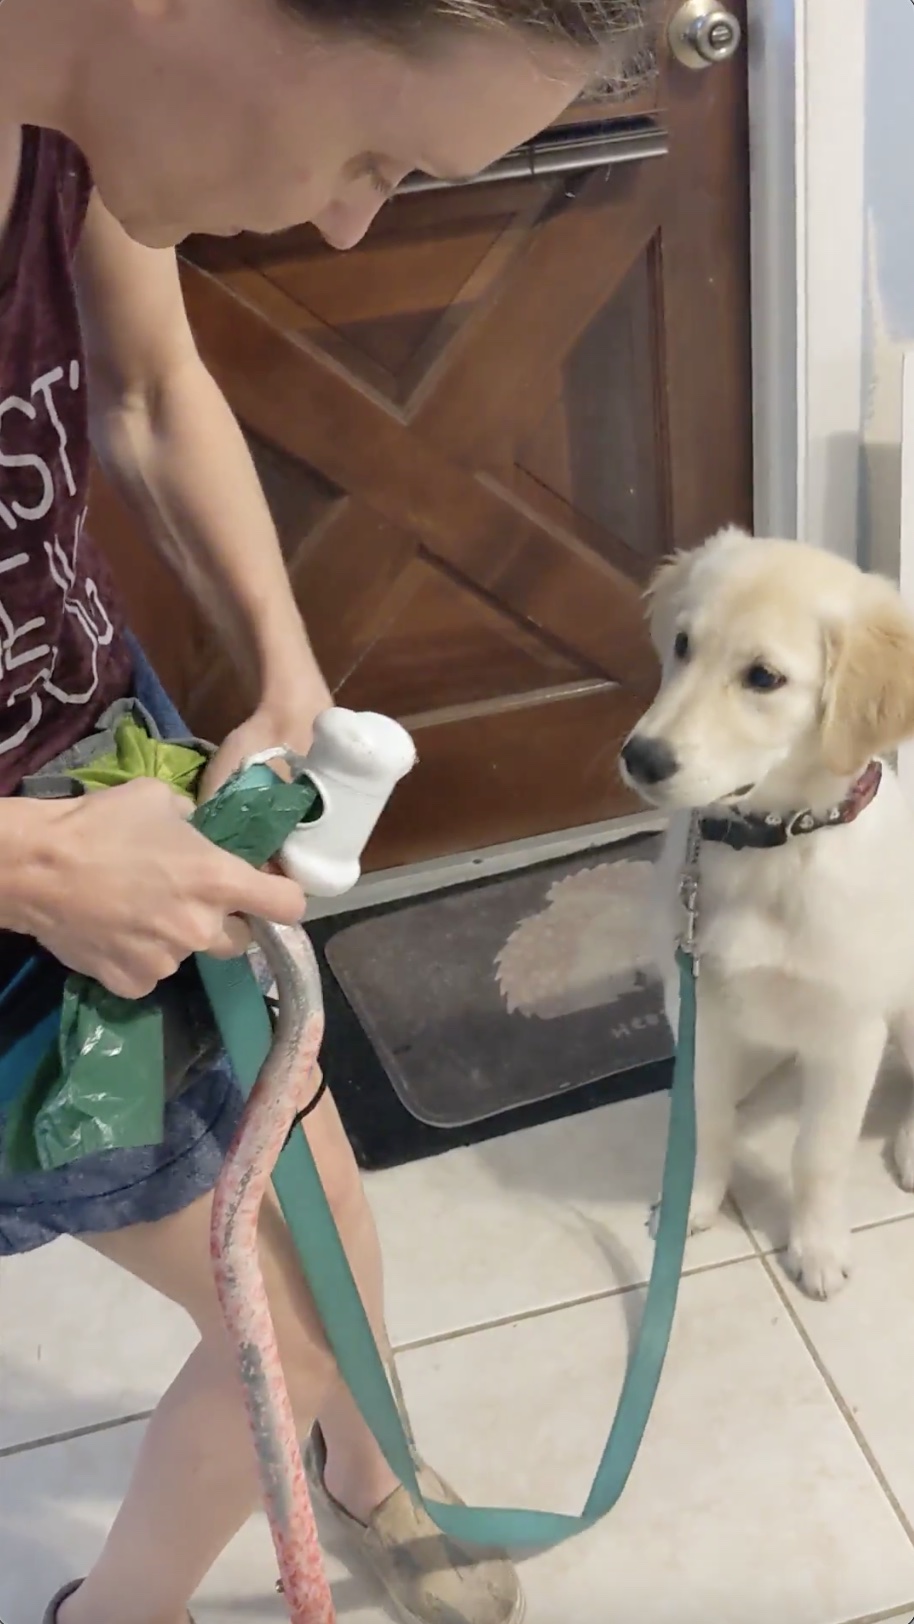 adapting service dog training cane and treats